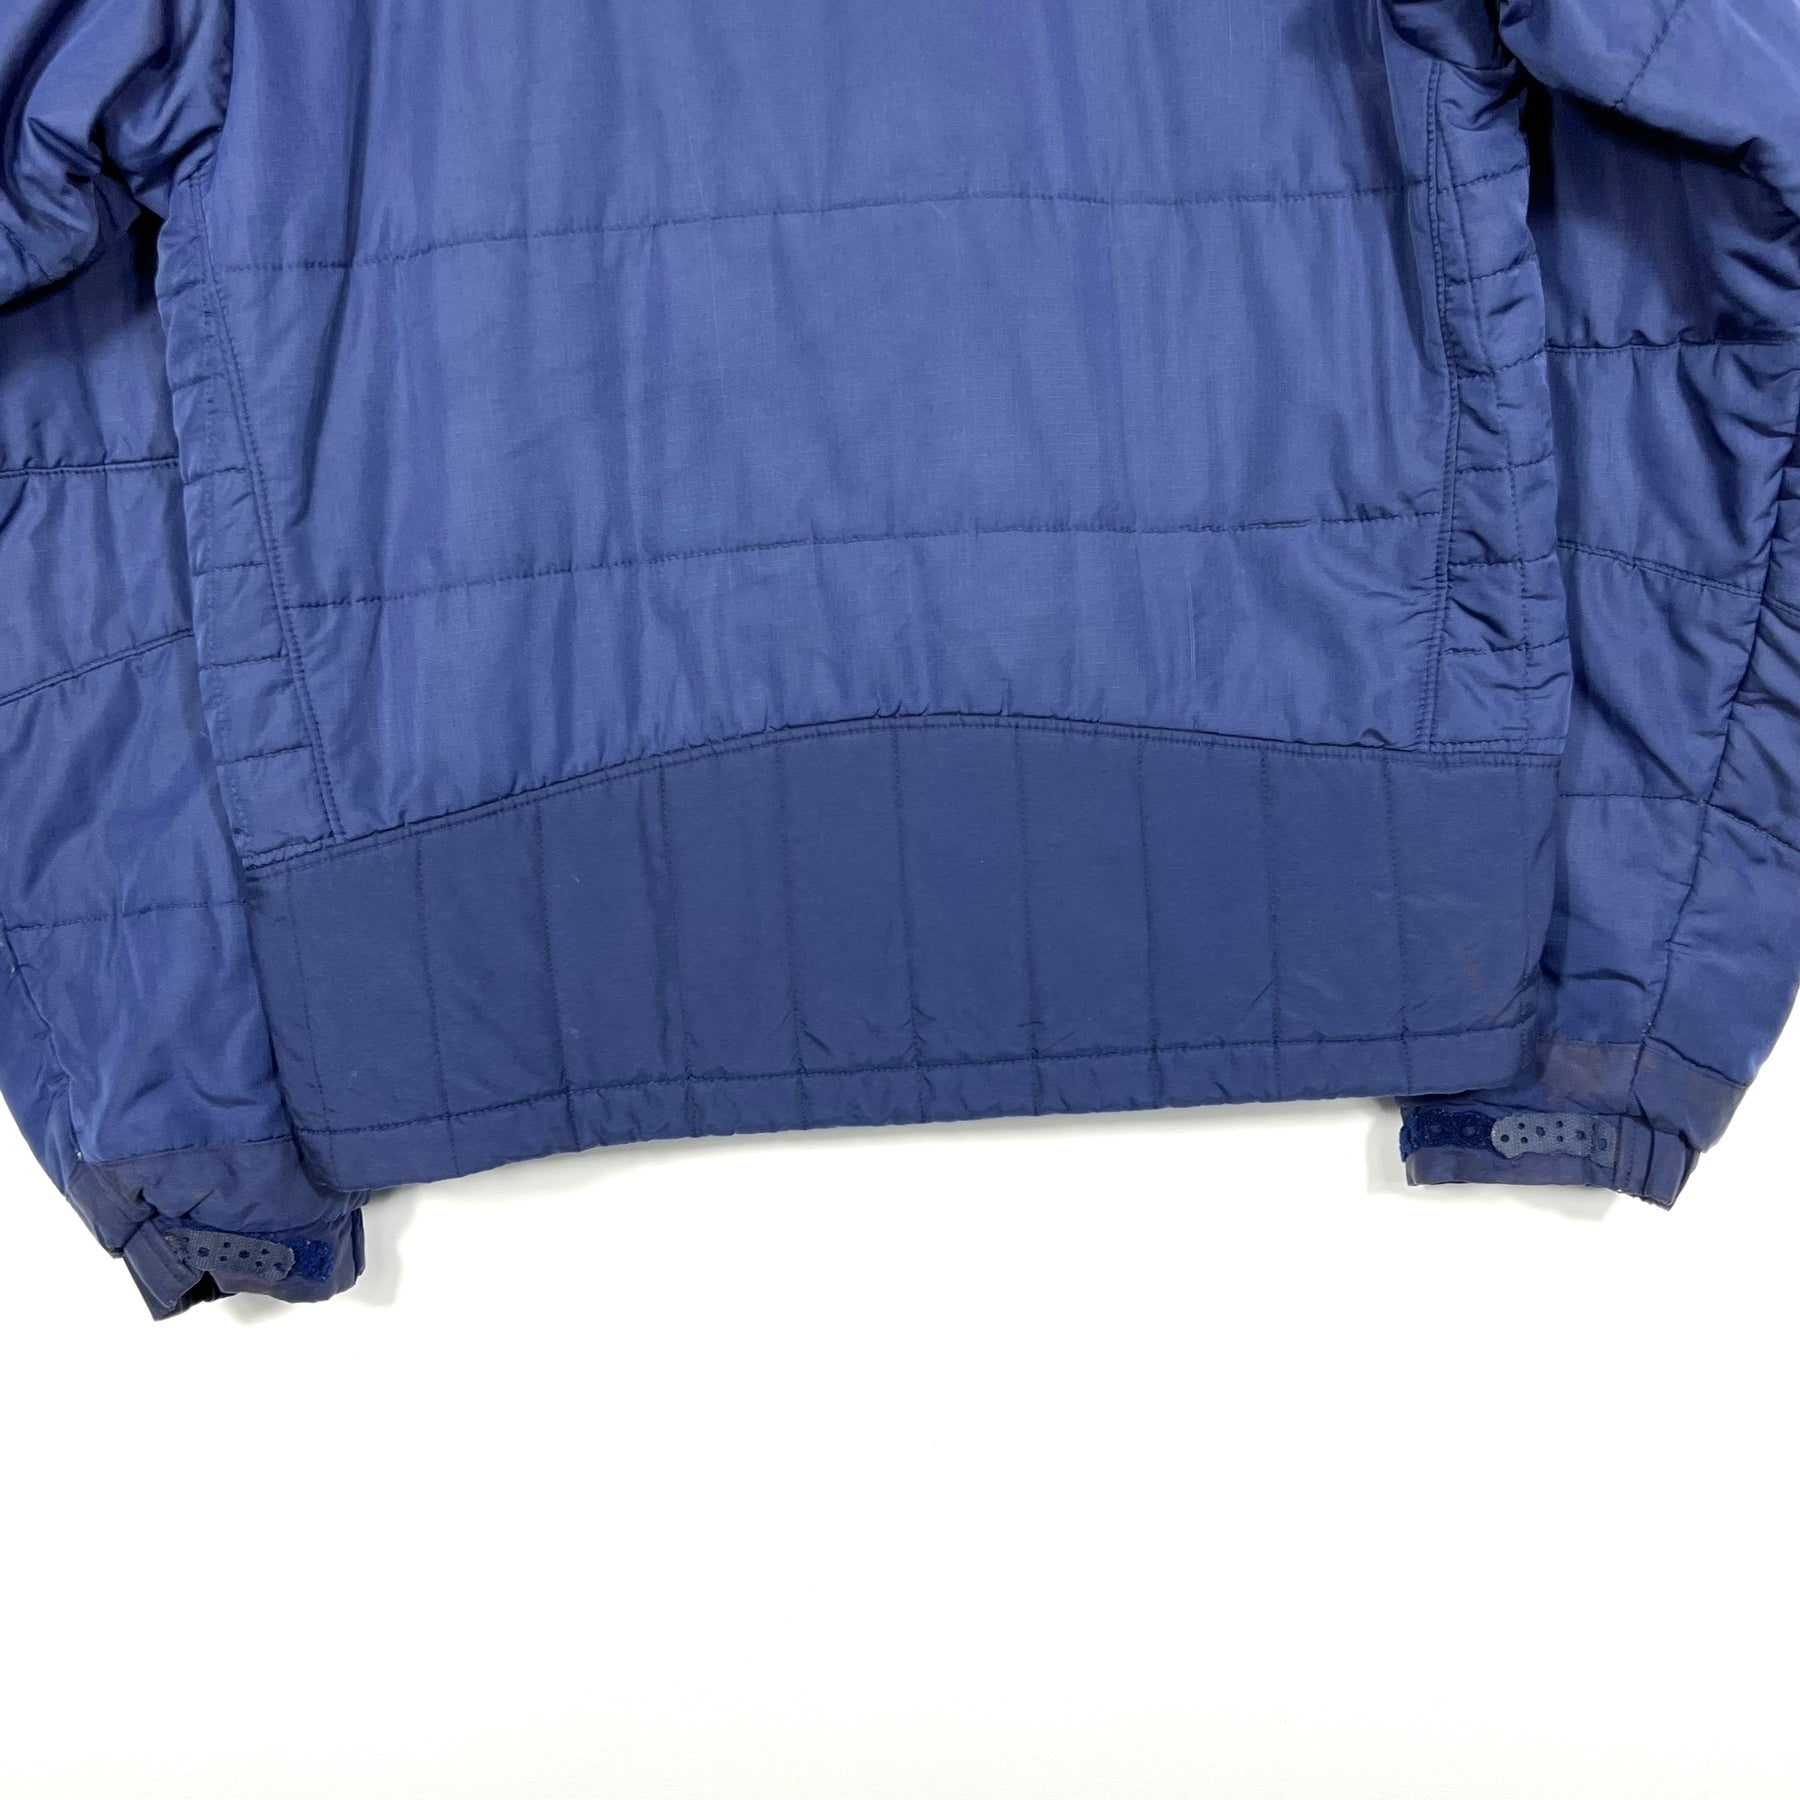 Vintage Patagonia Insulated Jacket - Men's Medium